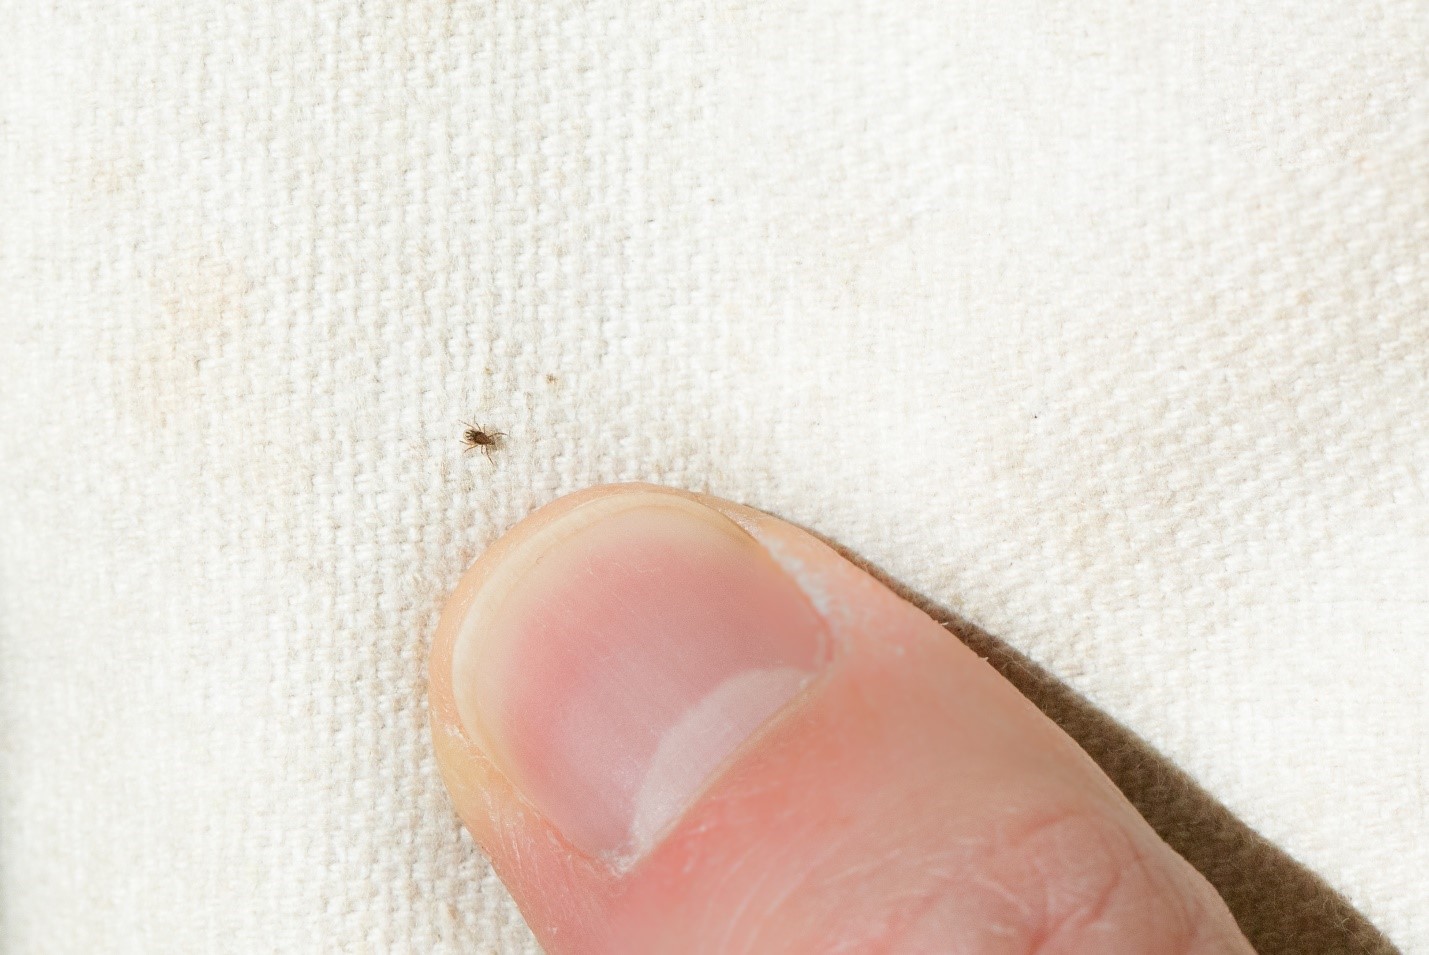 Tick on fabric next to human thumb